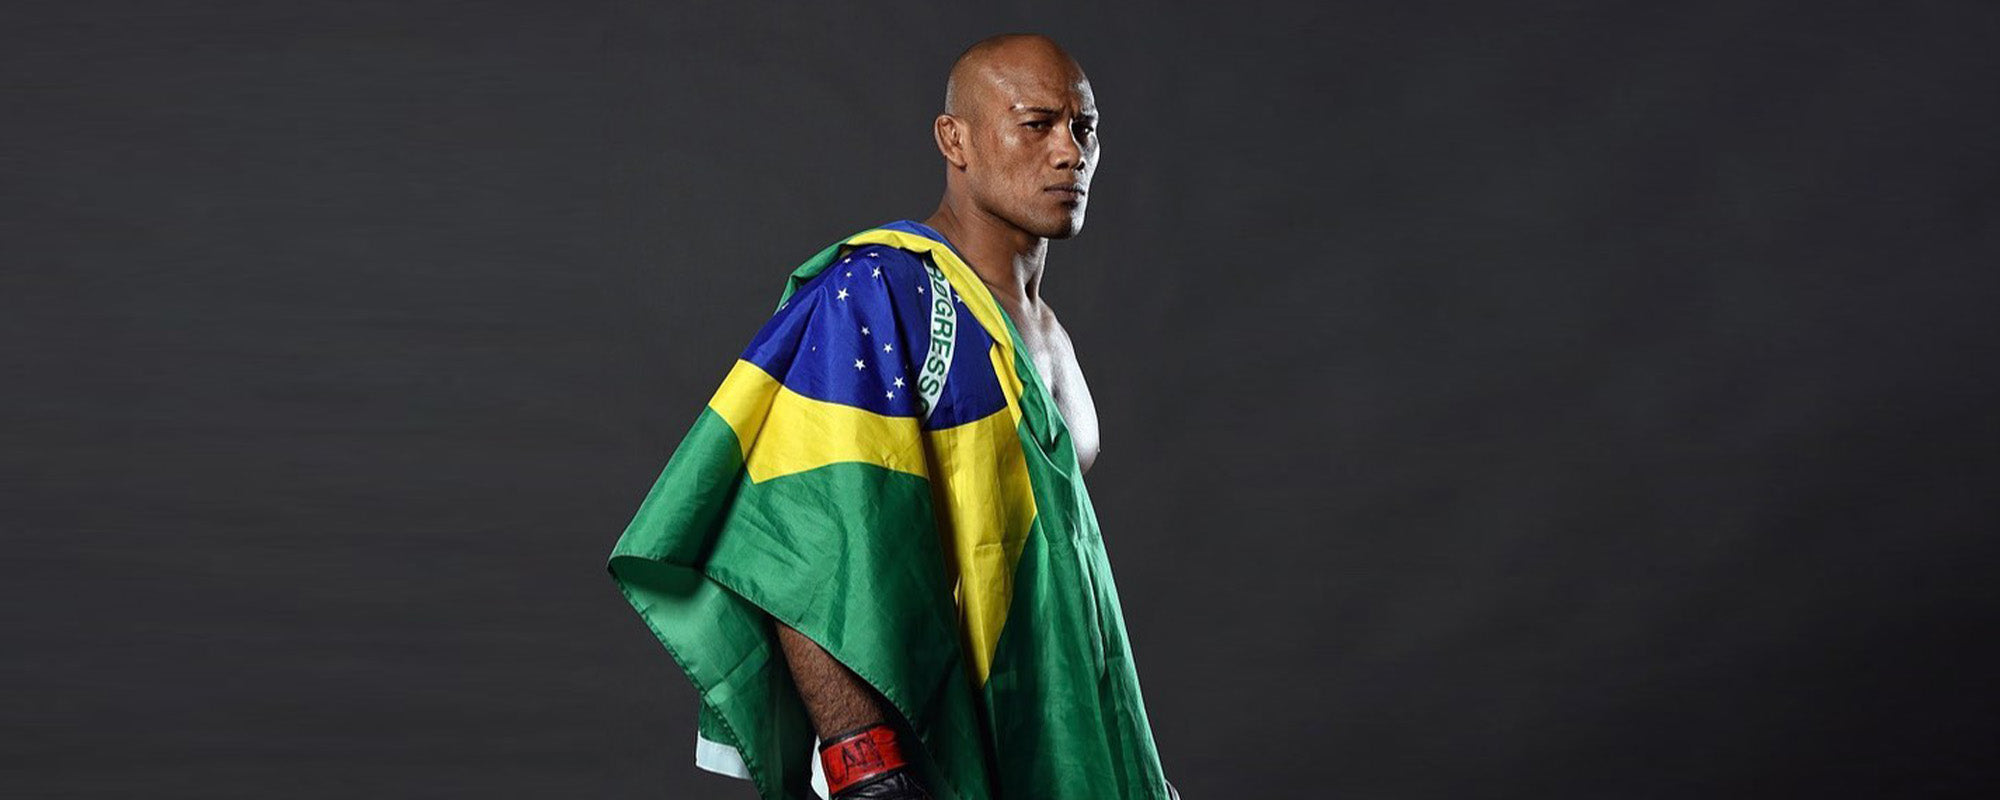 Ronaldo Souza - A Fierce MMA Beast & 4th Degree BJJ Black Belt